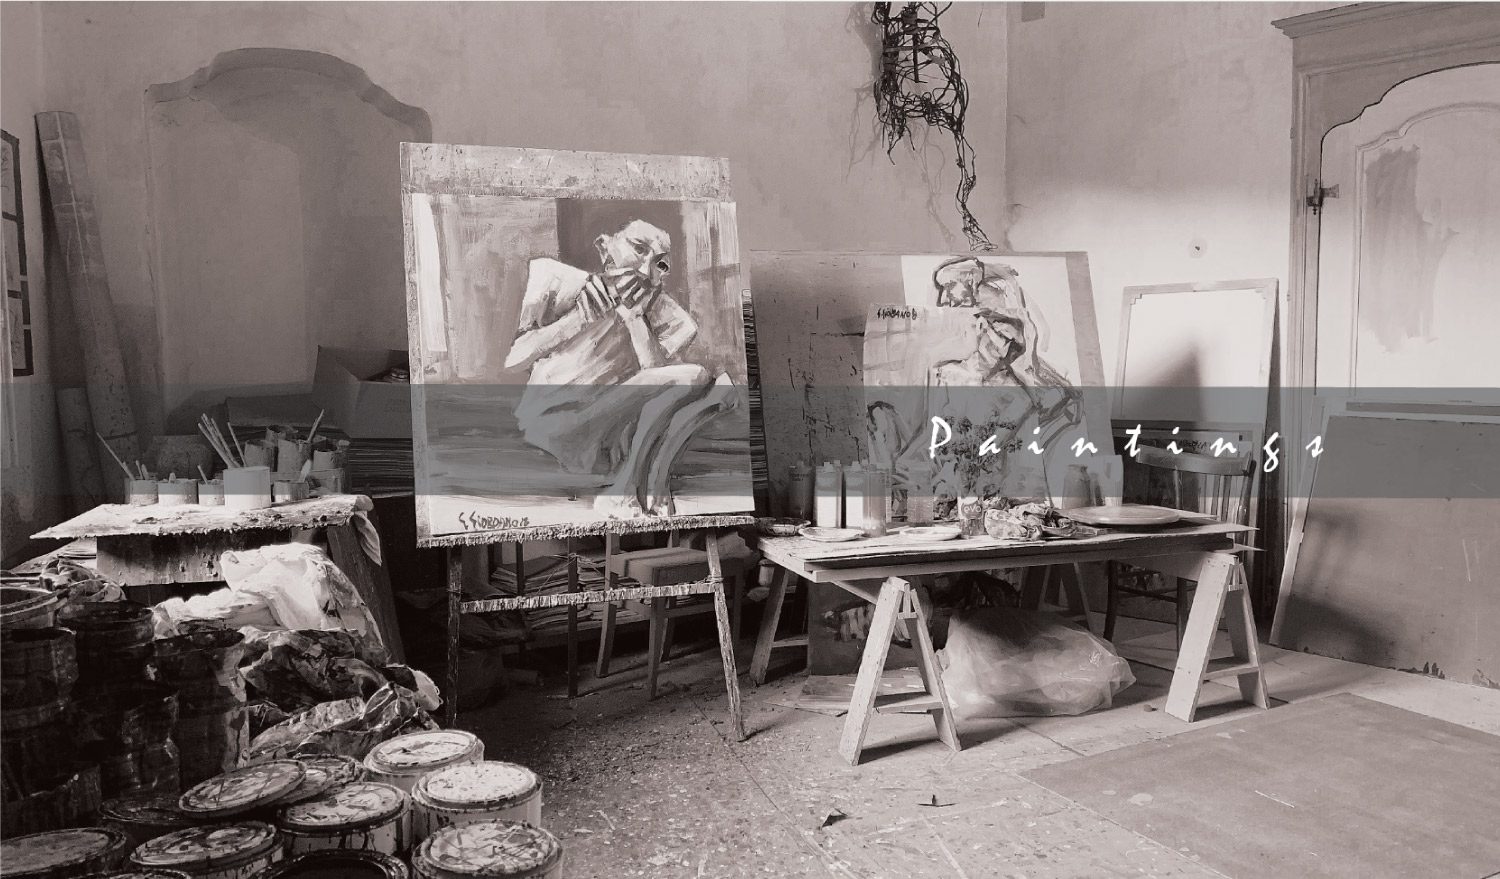 Giancarlo Giordano - Painting my life